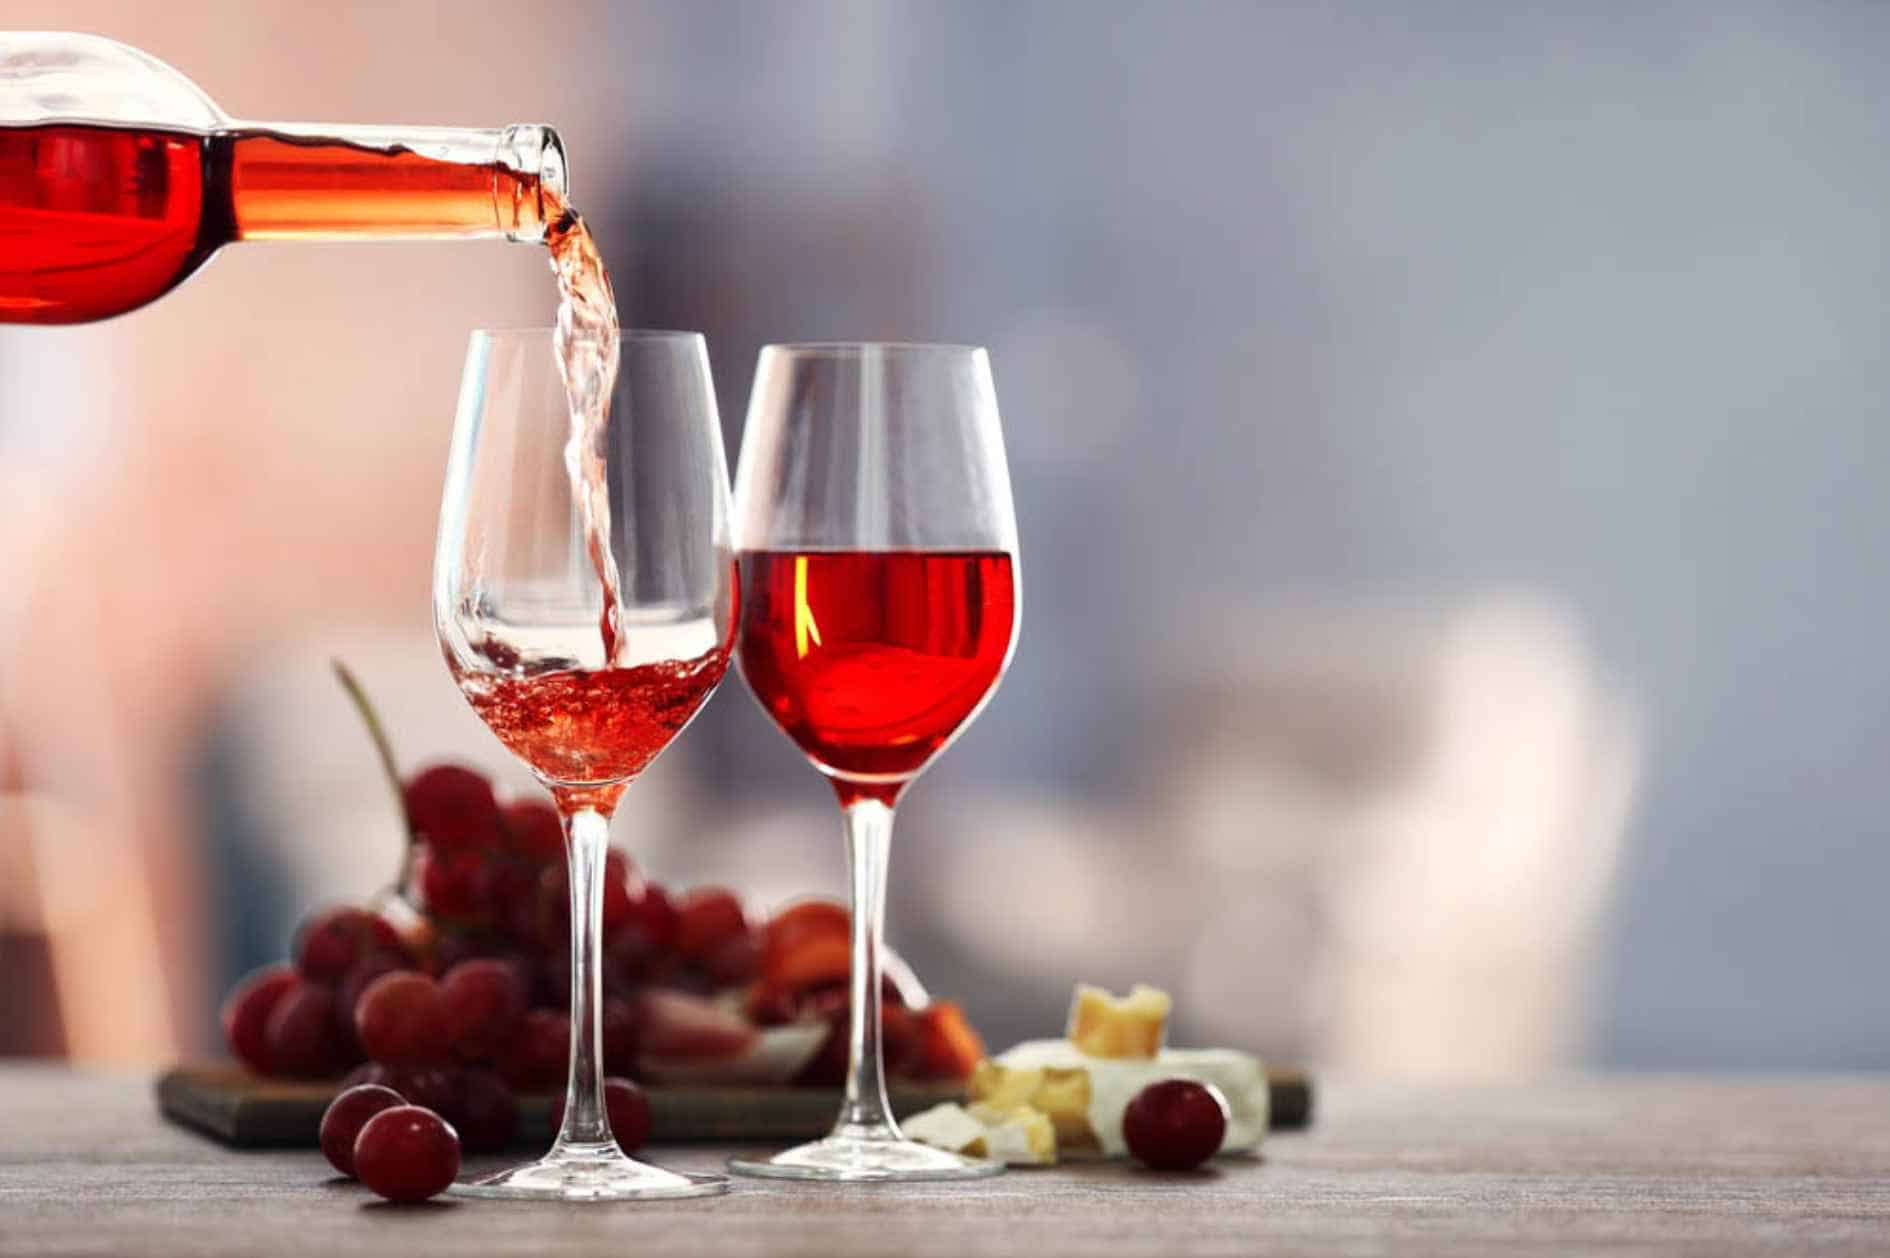 Blush Wine 101 Types, Characteristics, Benefits & Food Pairing